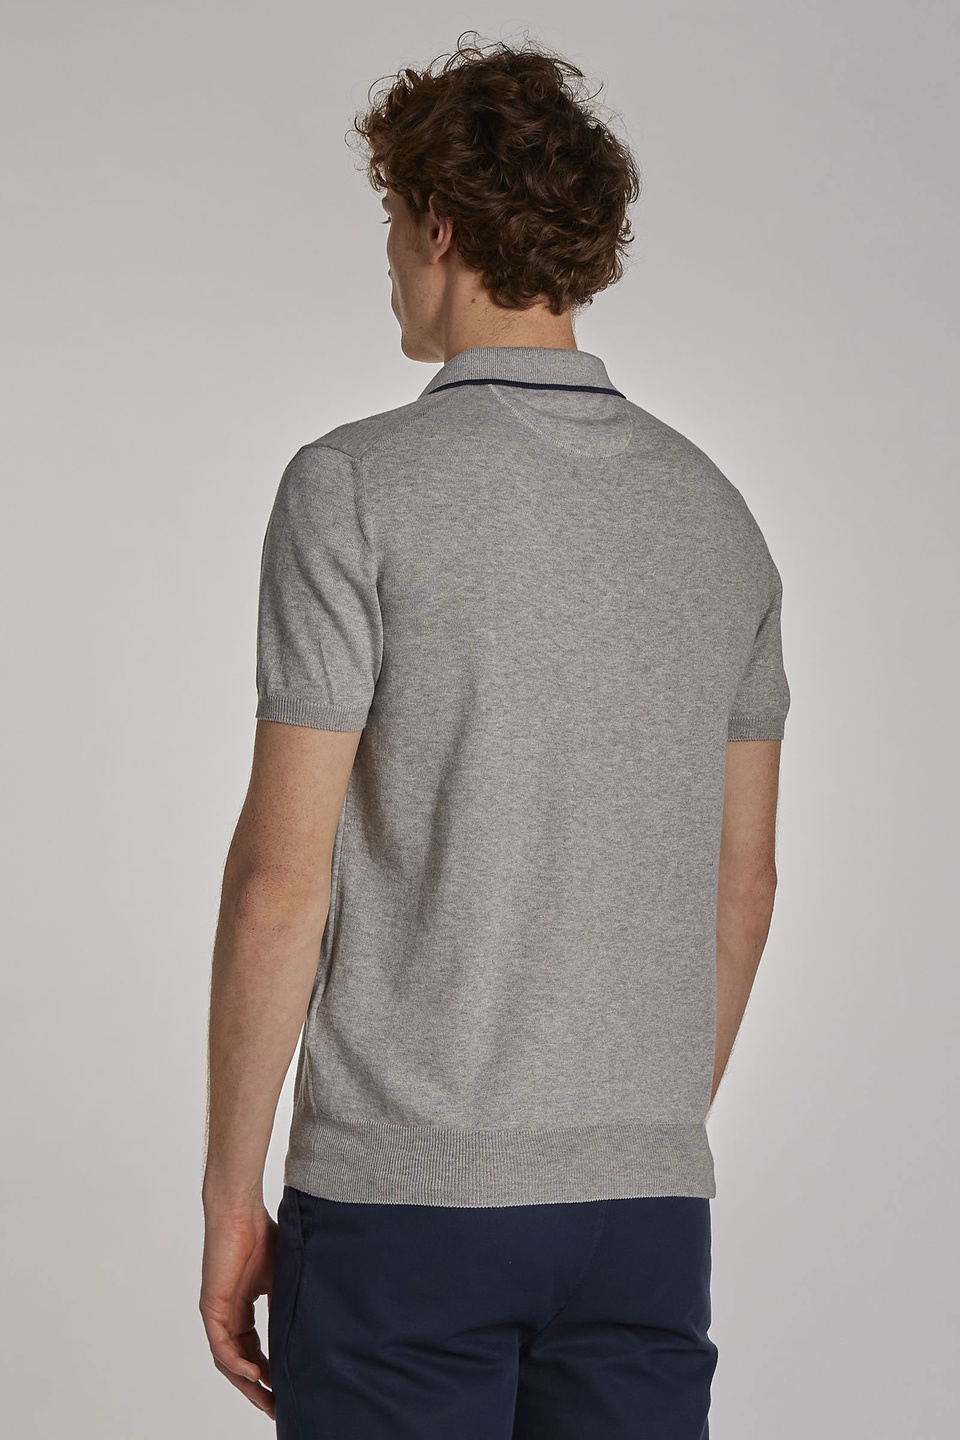 Herren-Poloshirt mit kurzen Ärmeln aus Baumwolle im Regular Fit - La Martina - Official Online Shop